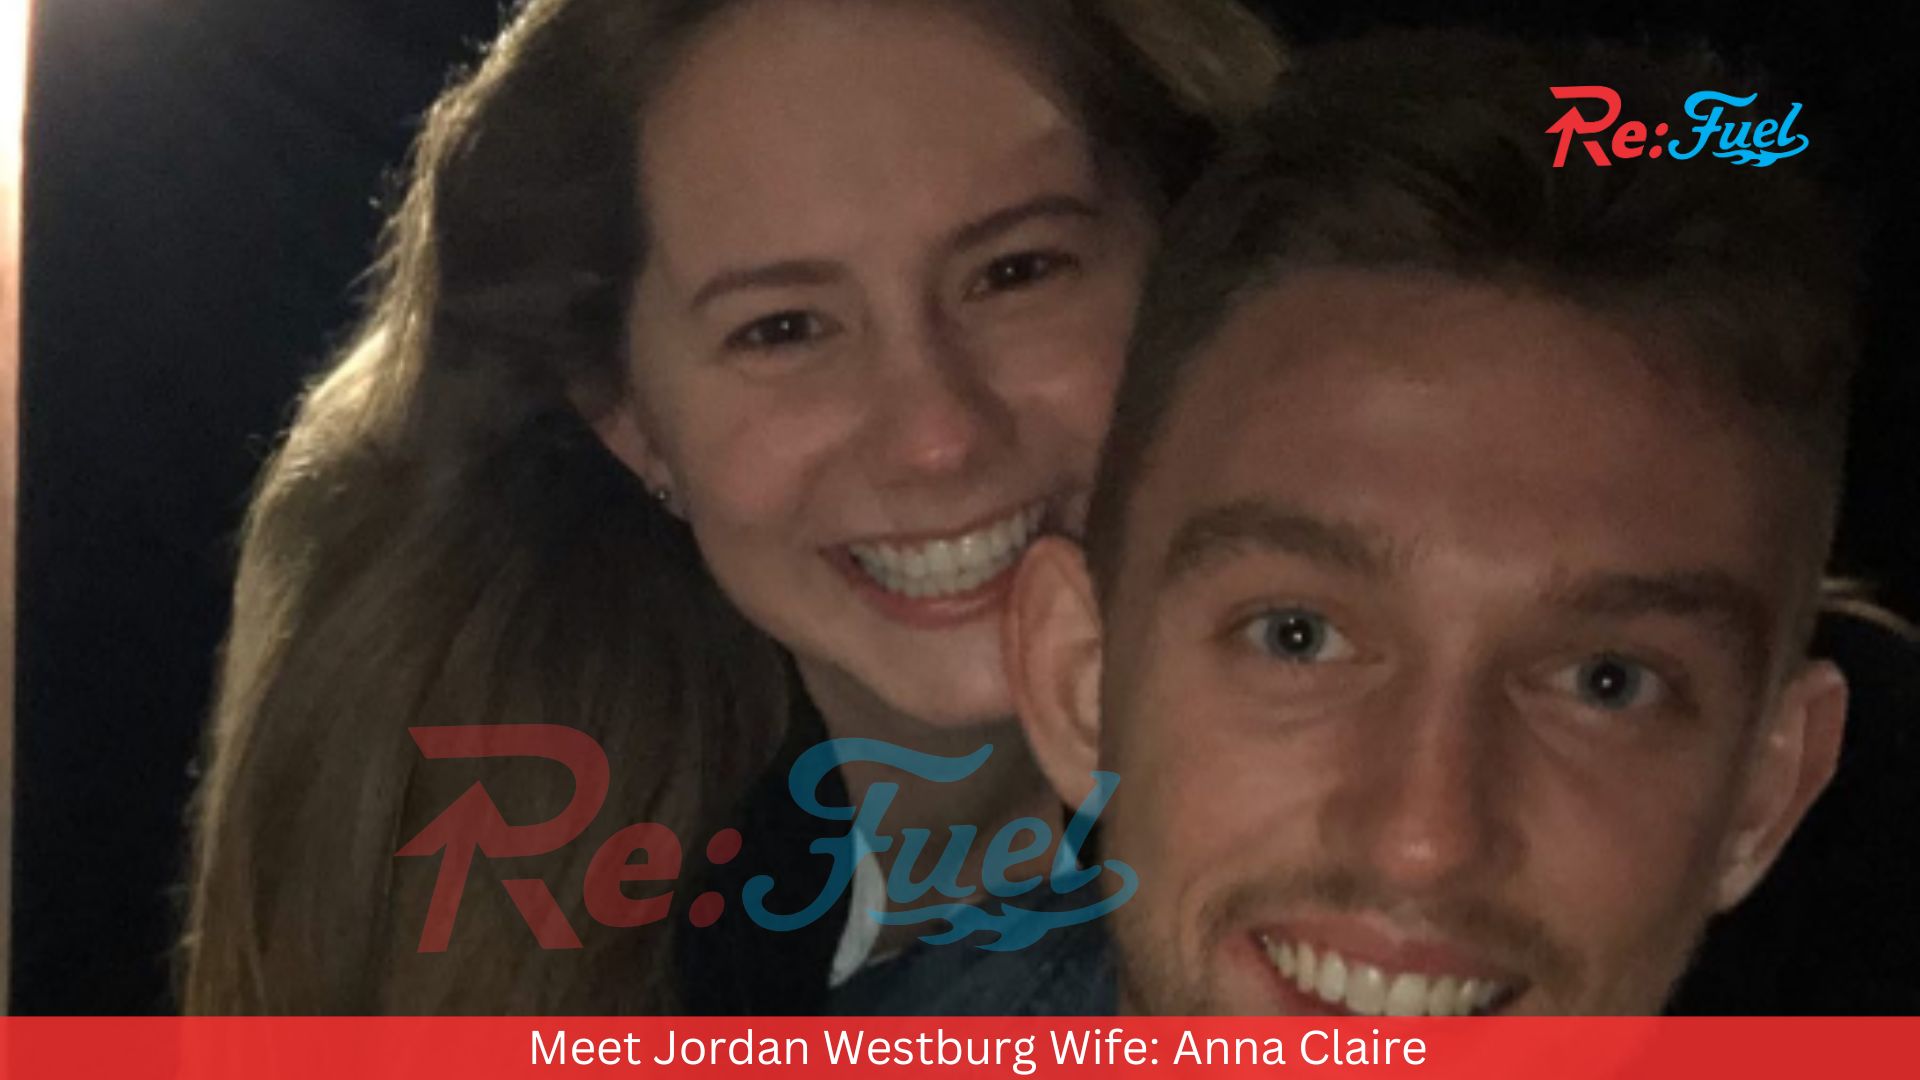 Meet Jordan Westburg Wife: Anna Claire